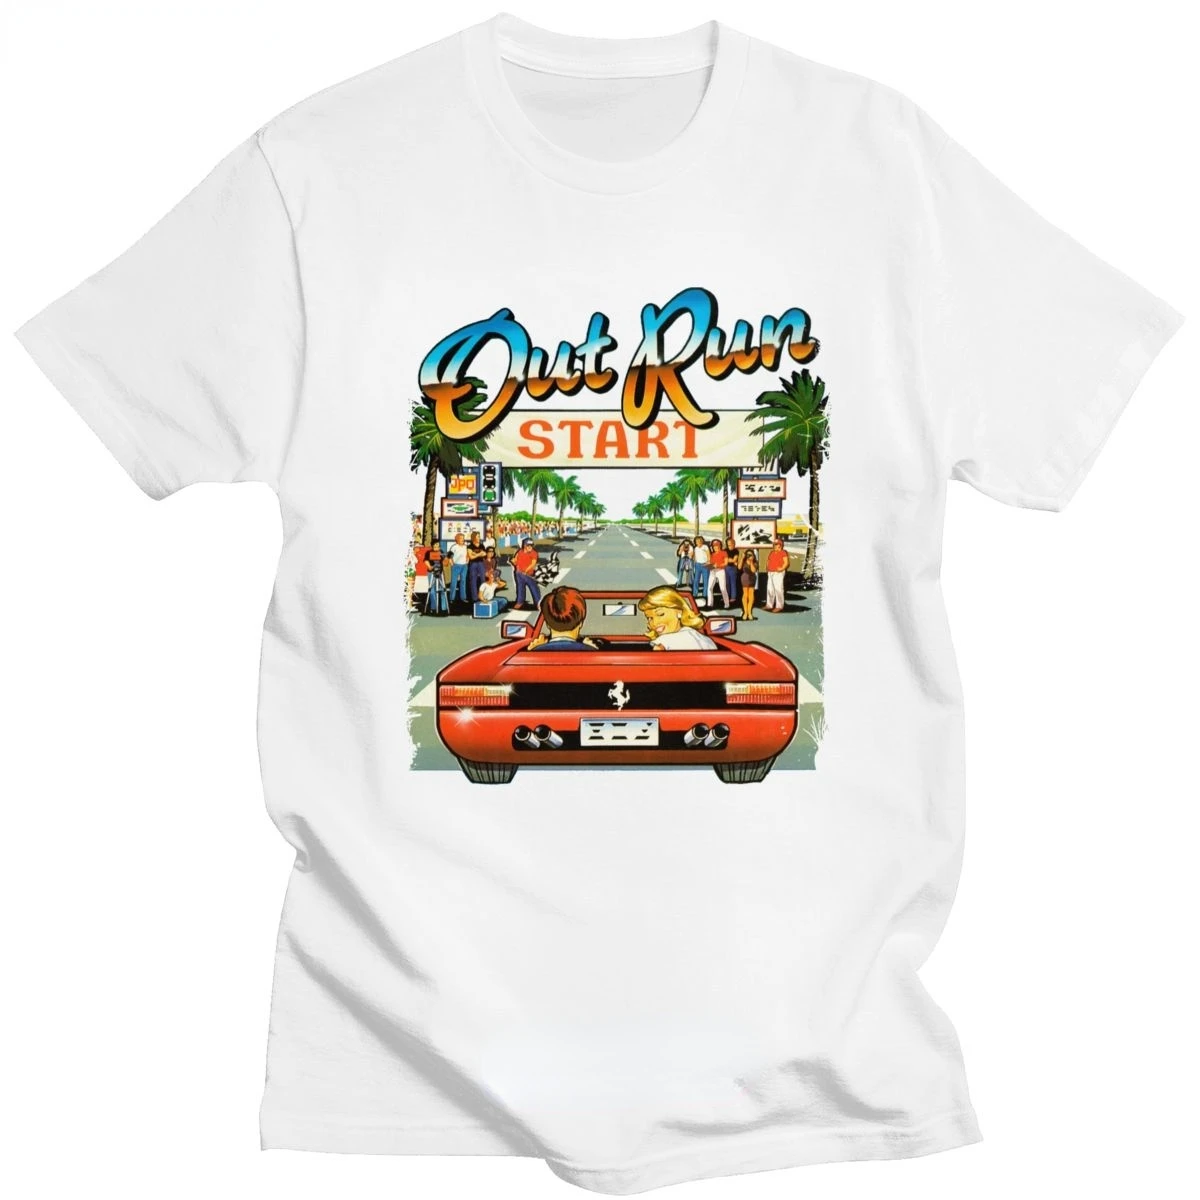 Japan Arcade Racing Video Game Out Run T Shirt Männer Vintage 80er Konsole Gaming Tops übertreffen T -Shirt Casual Oversize